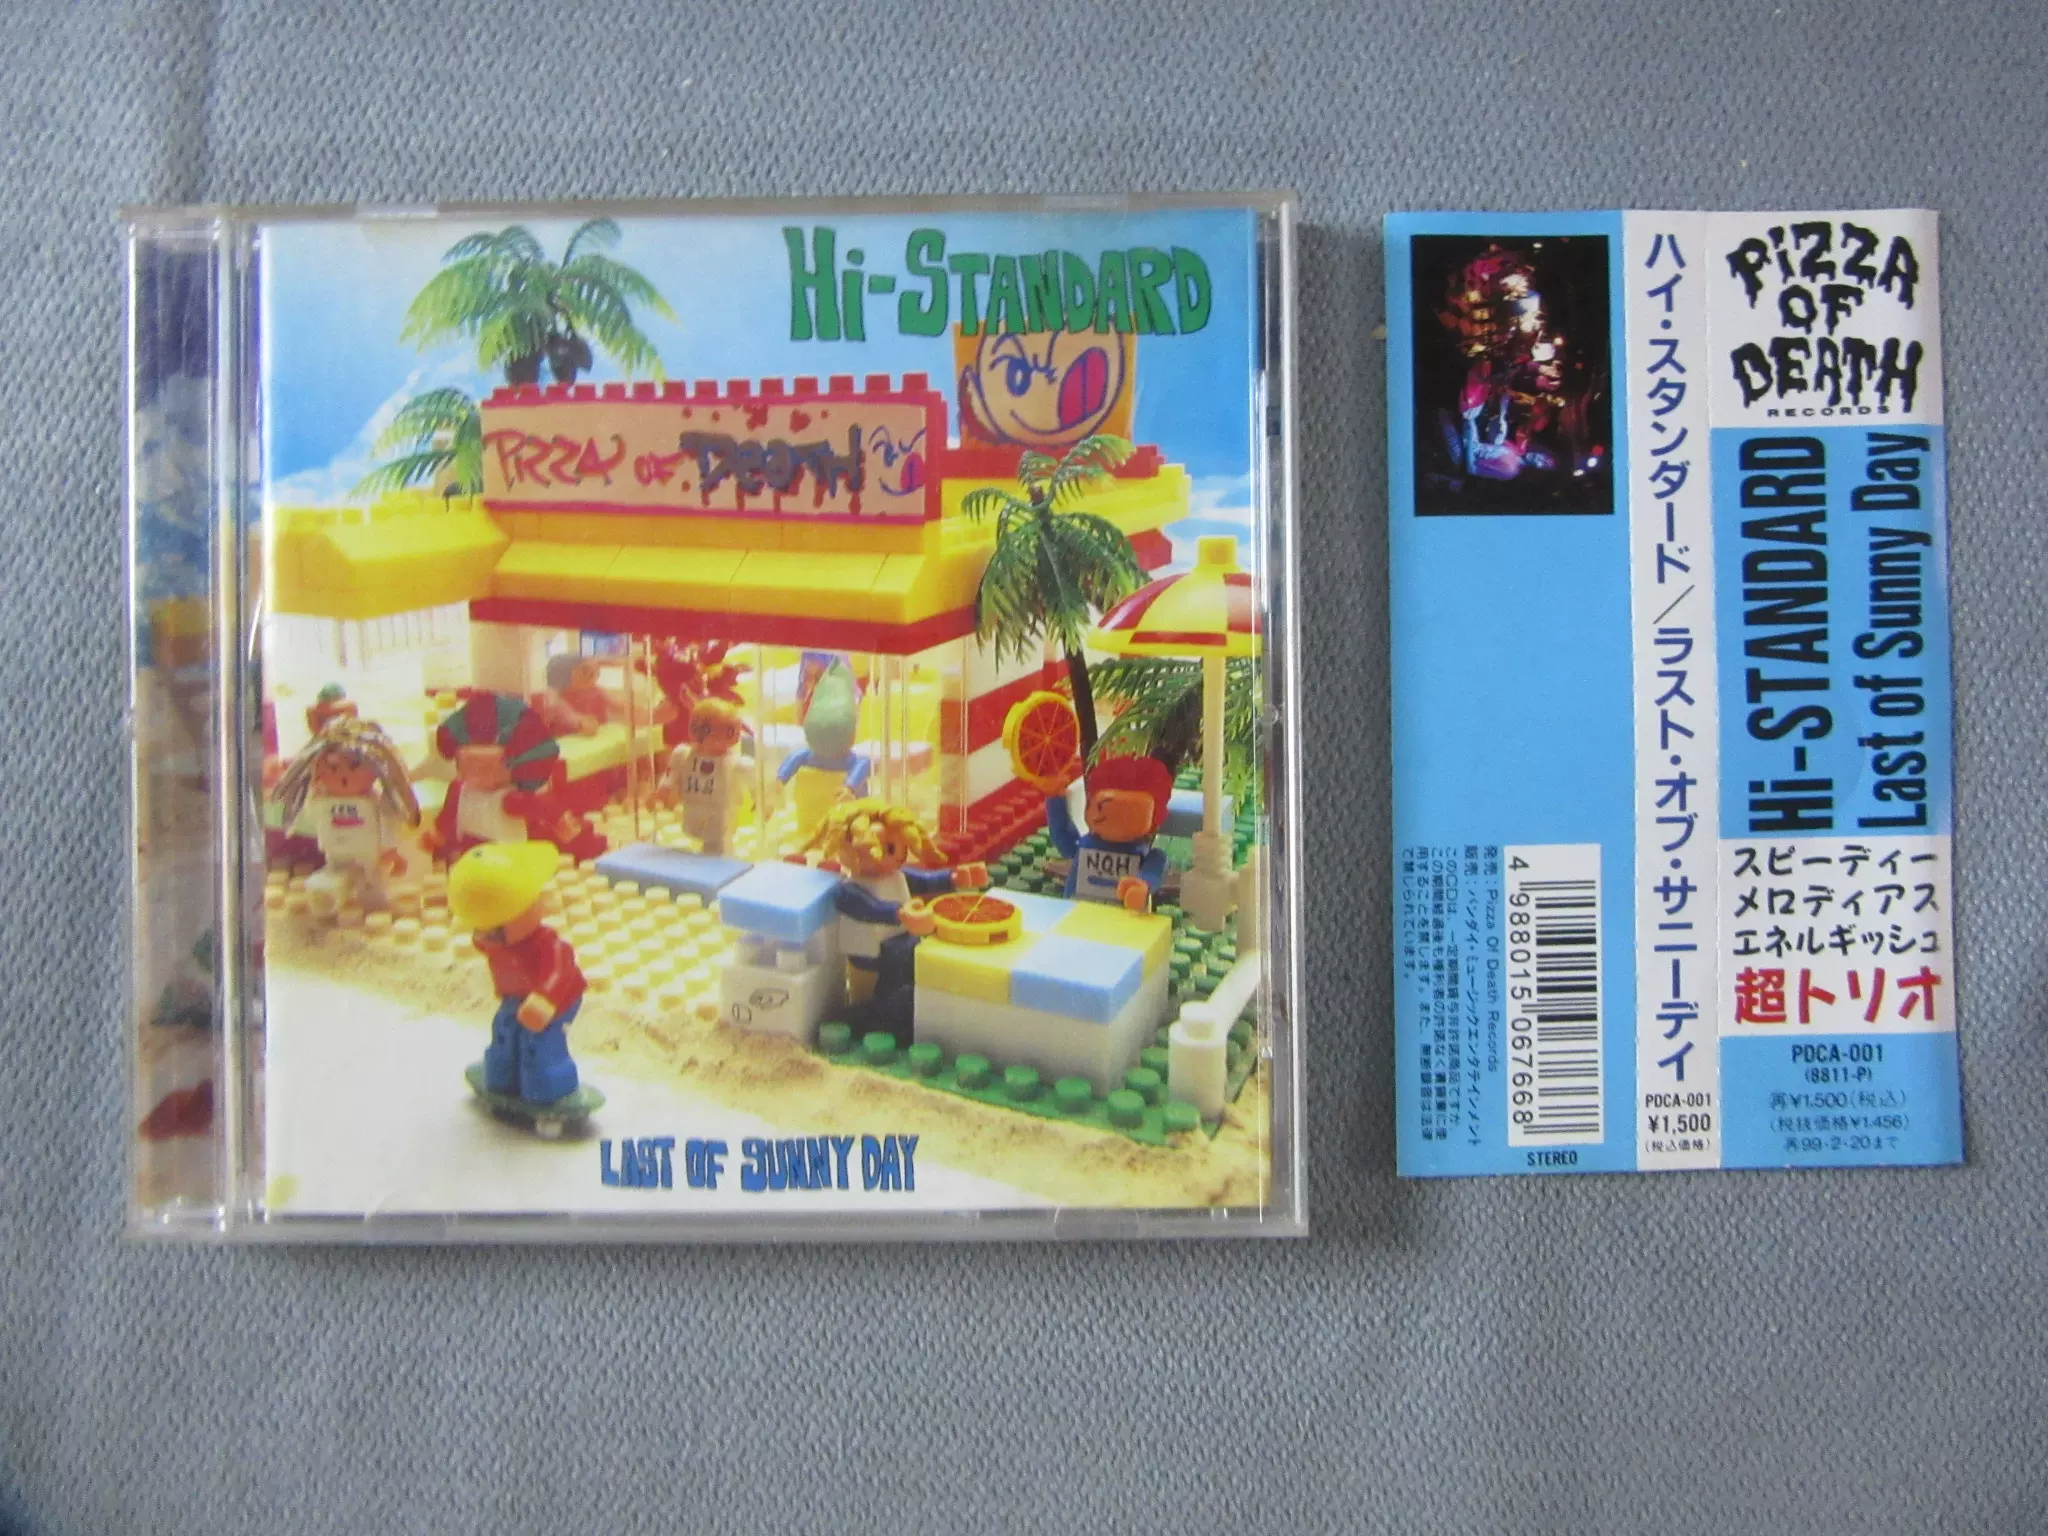 Hi-STANDARD LAST OF SUNNY DAY CD 初回レゴジャケ - CD